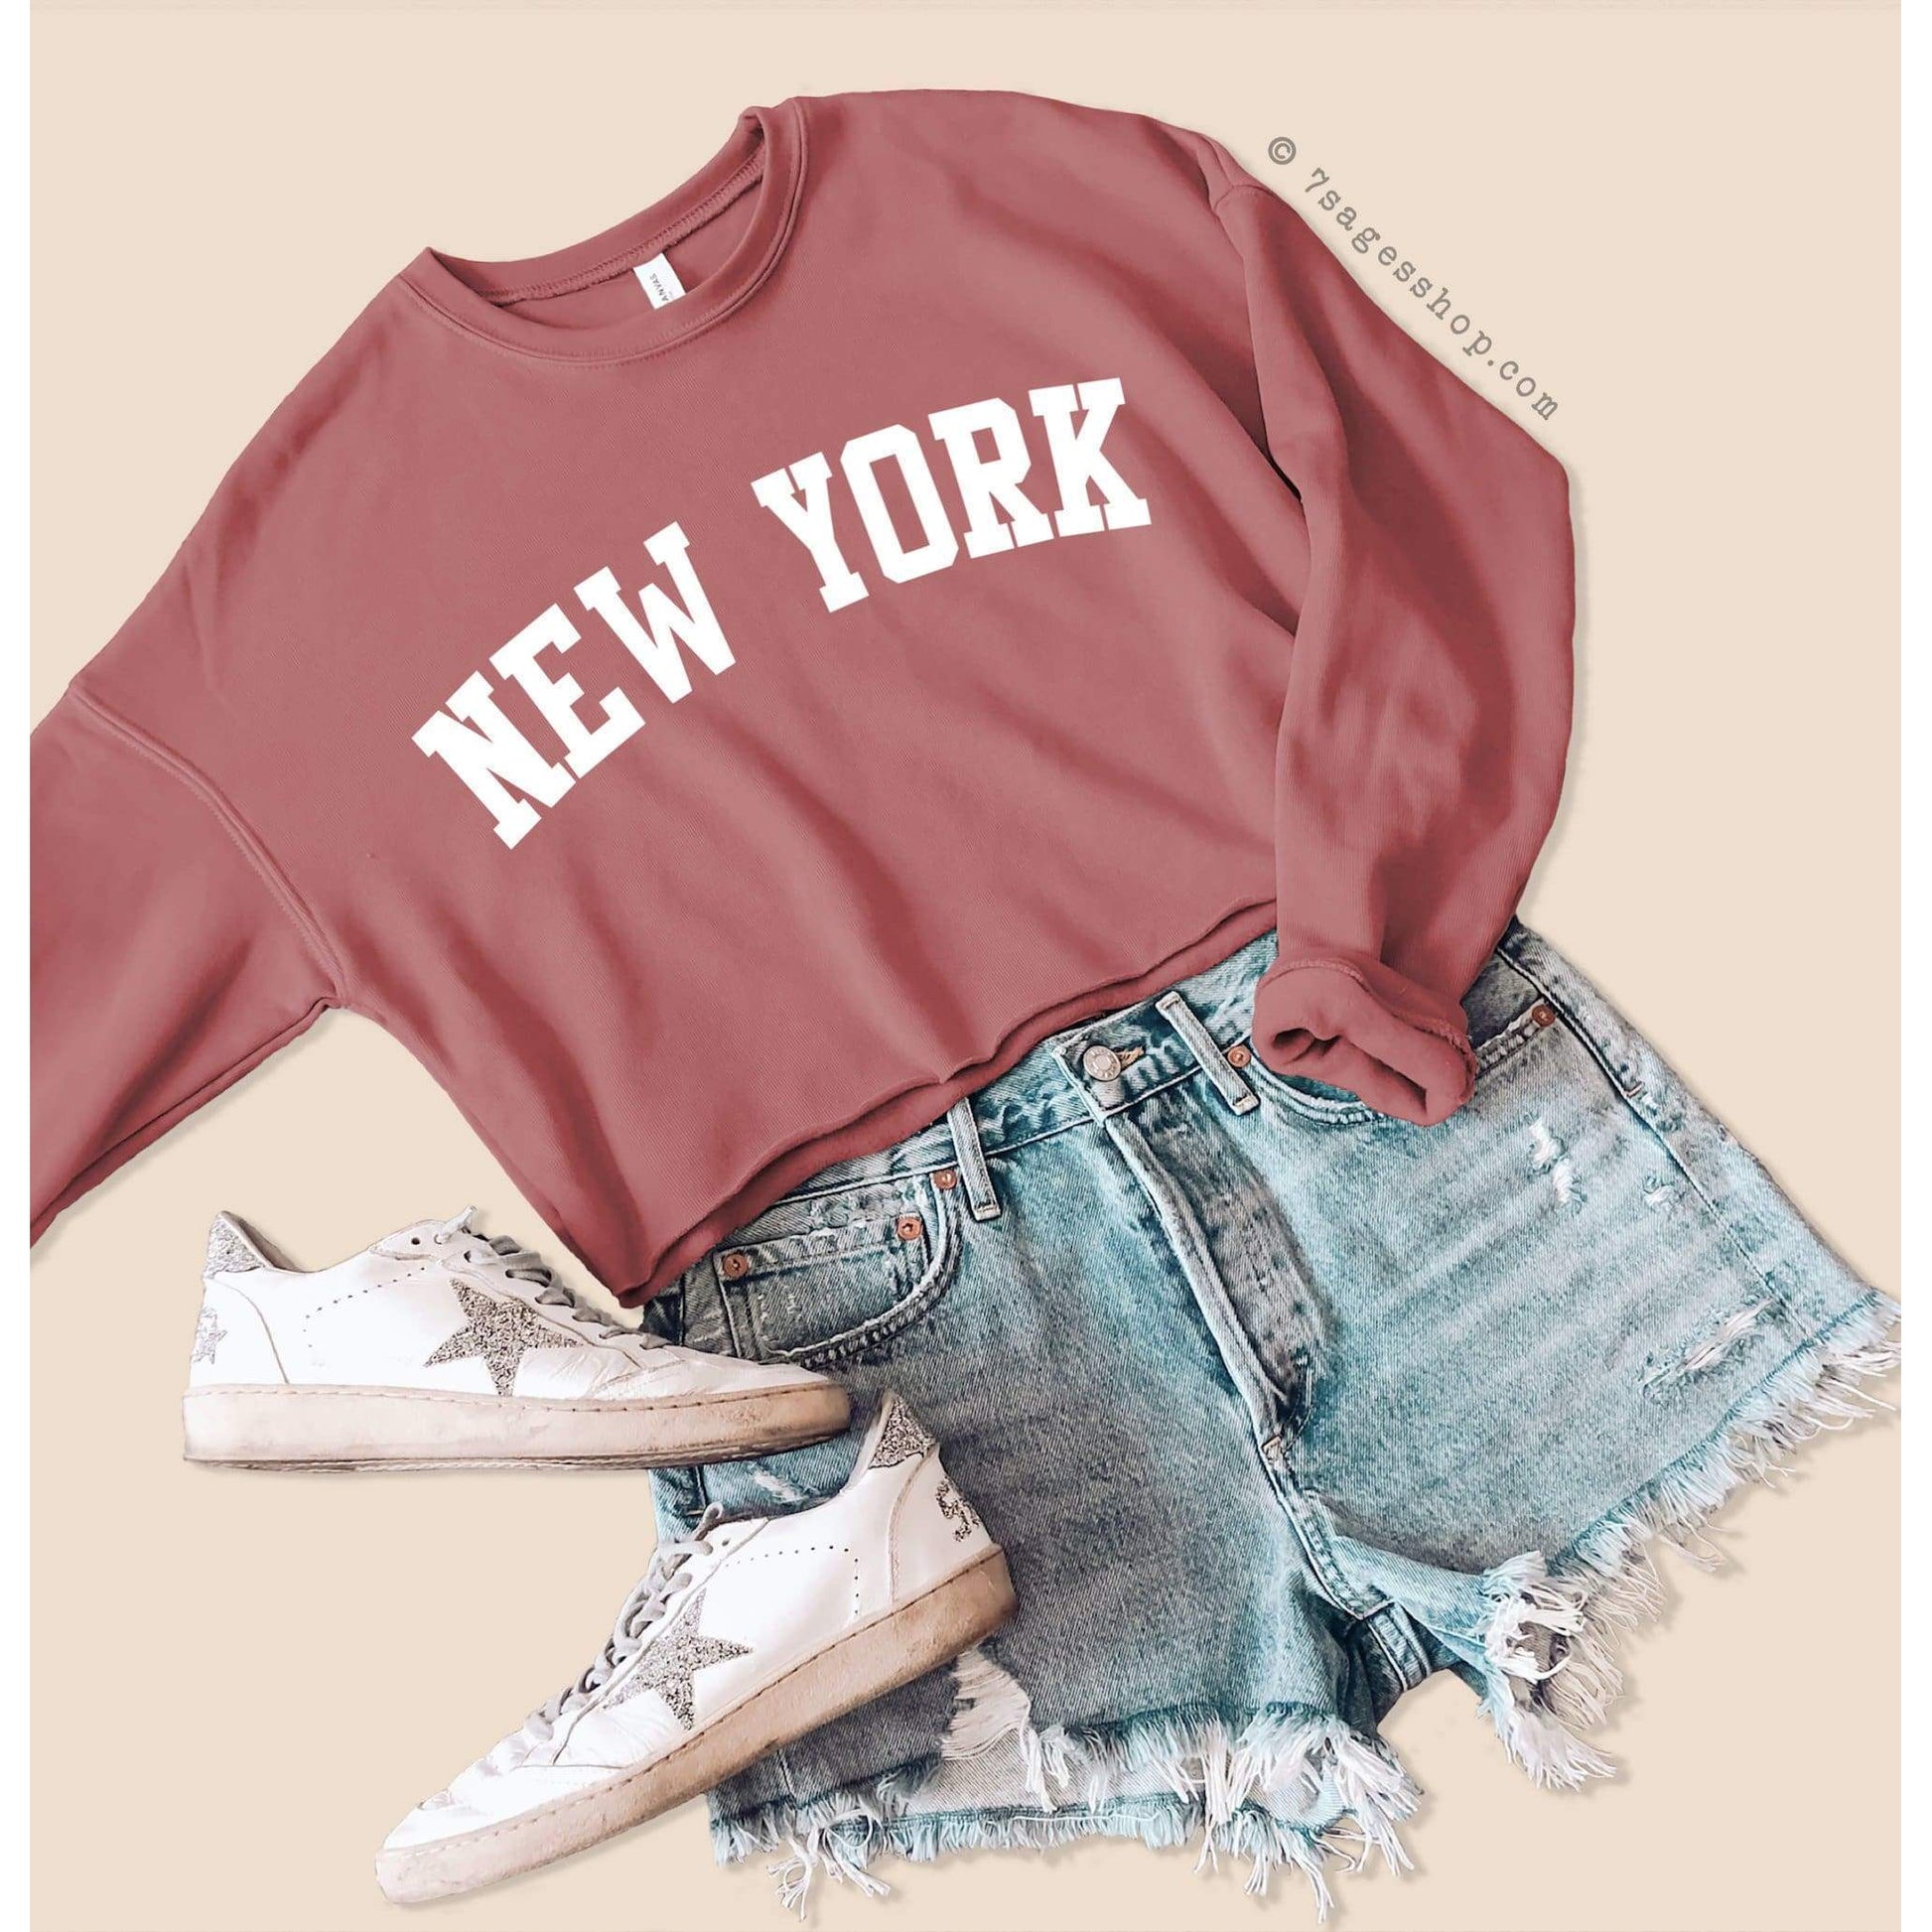 New York Sweatshirt - New York Cropped Sweatshirt - East Coast Sweatshirt - New York Shirt - Fleece Sweater - Cropped Sweater